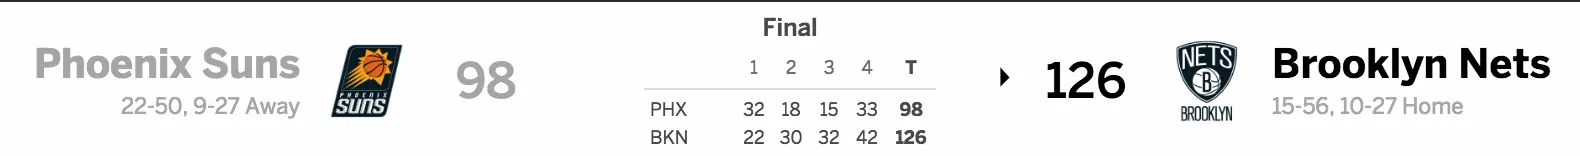 Brooklyn Nets vs Phoenix Suns 3/23/17 Score